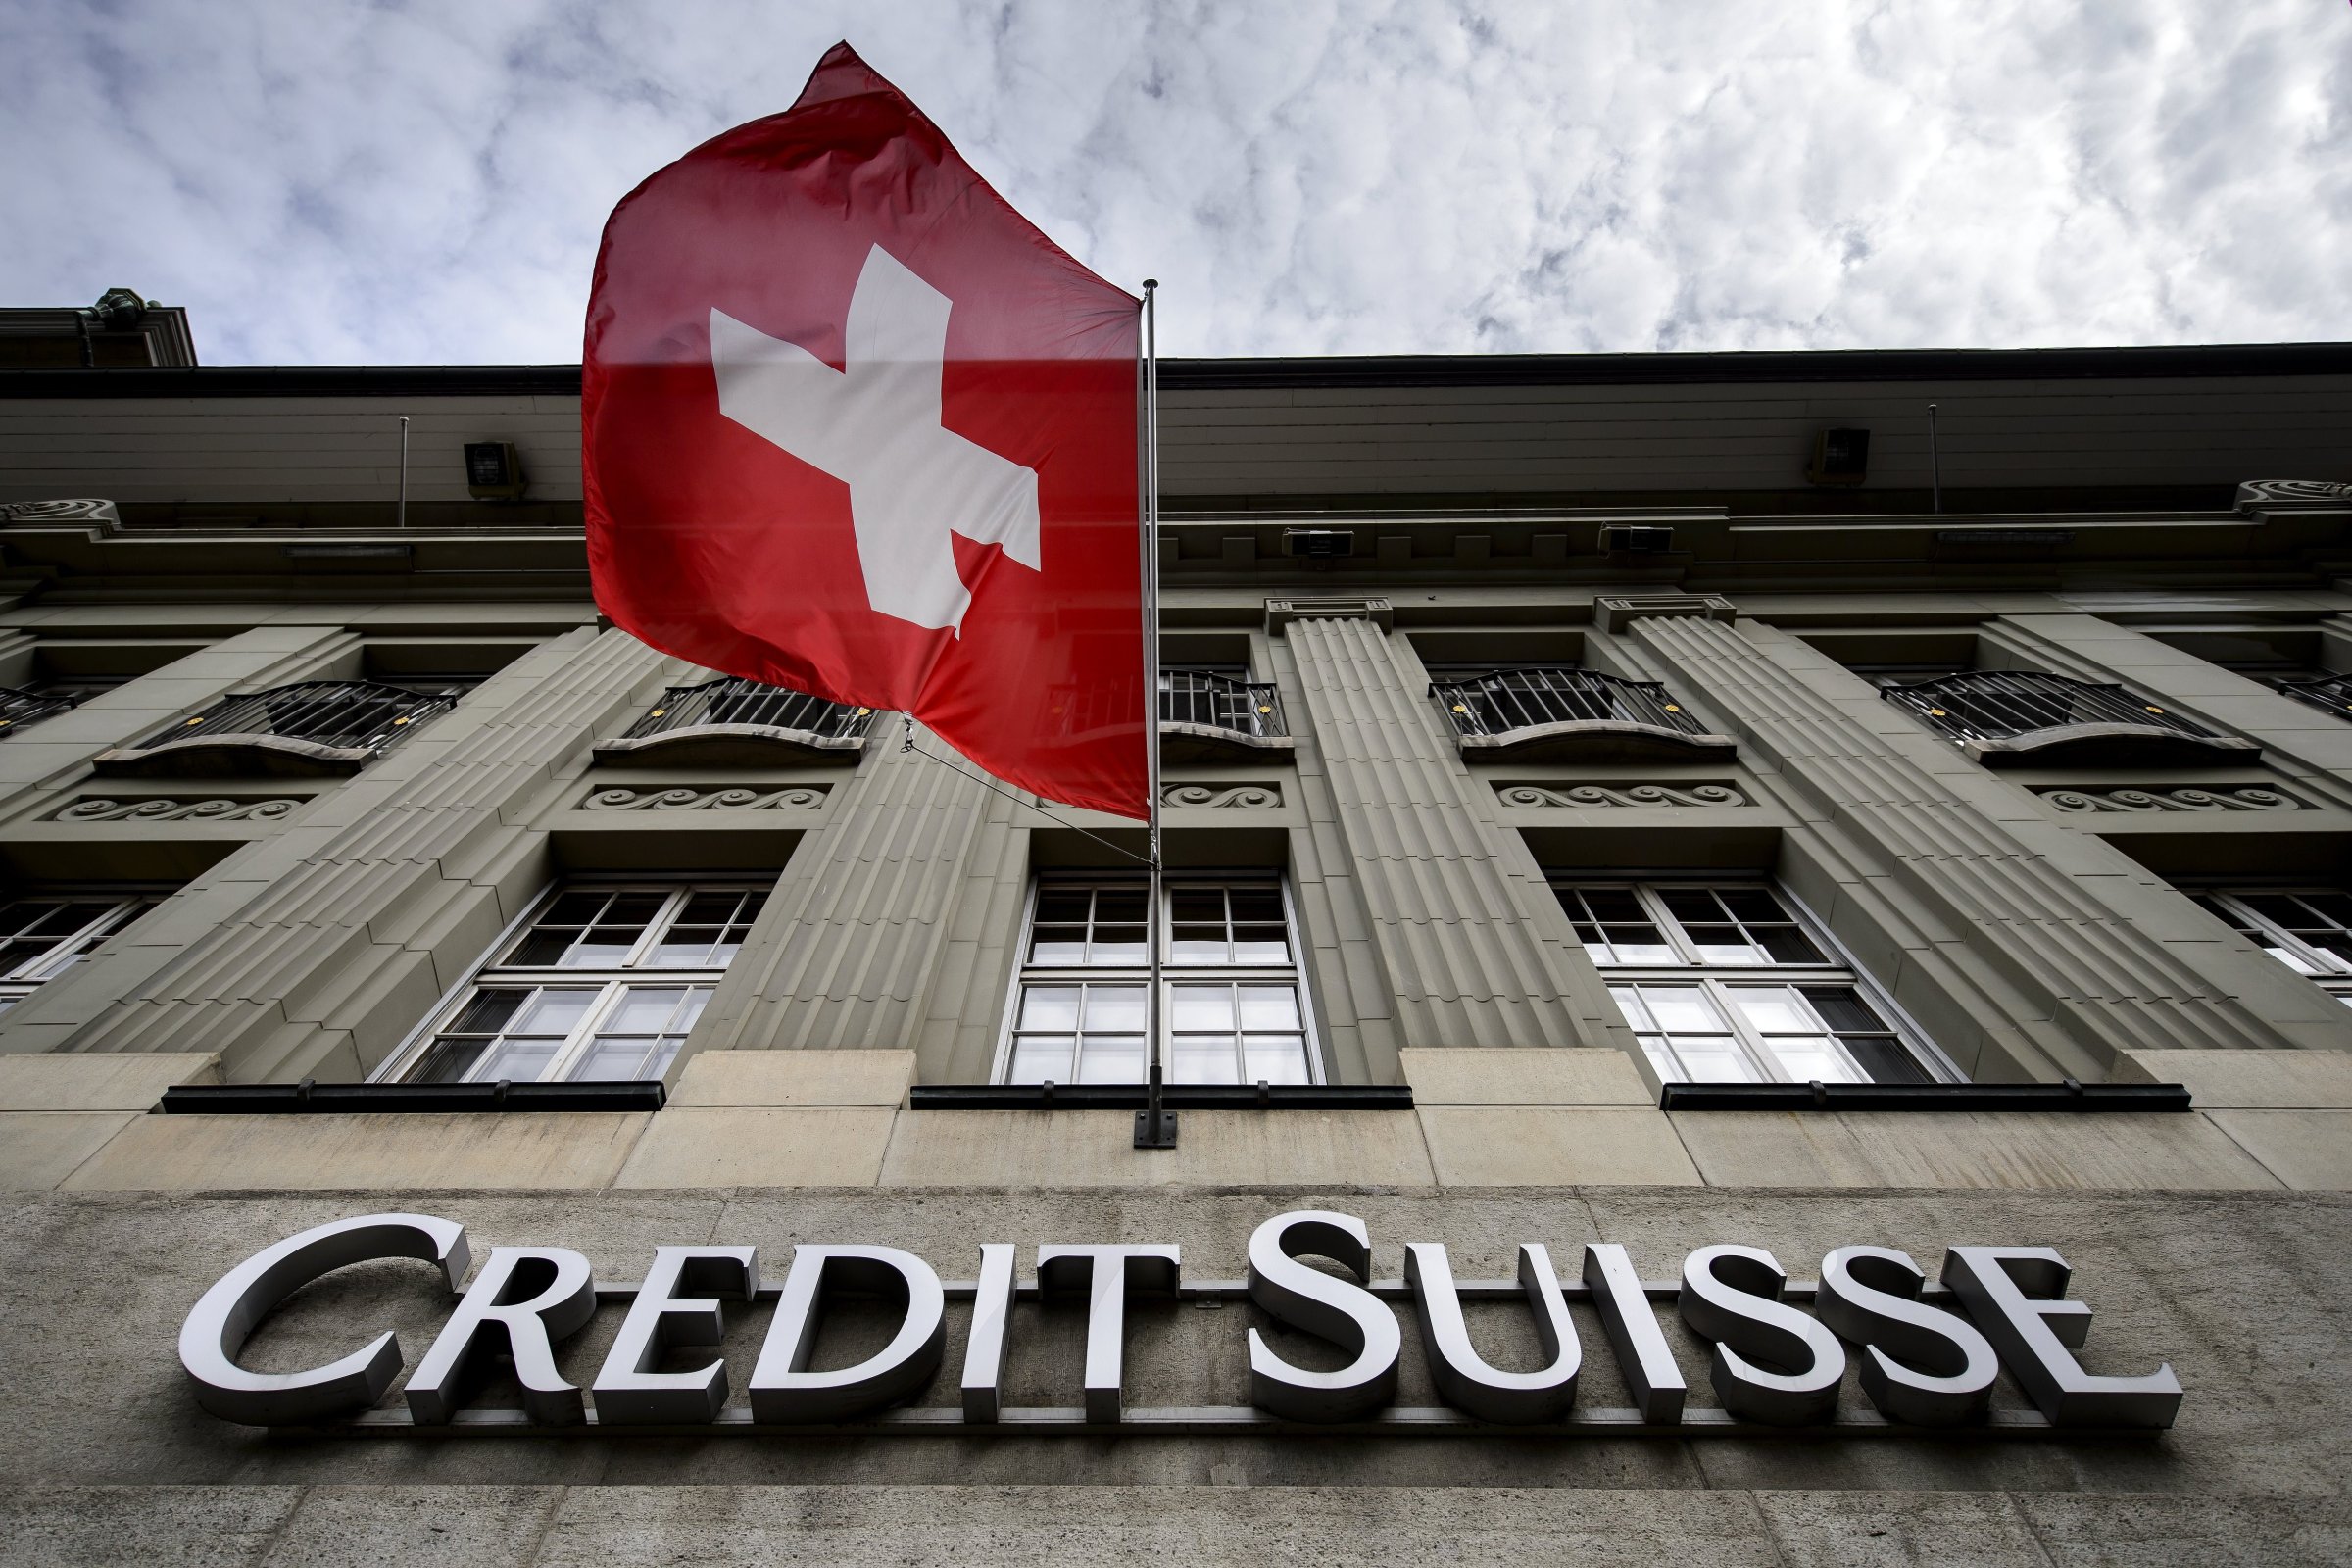 SWITZERLAND-US-BANKING-BUSINESS-CREDITSUISSE